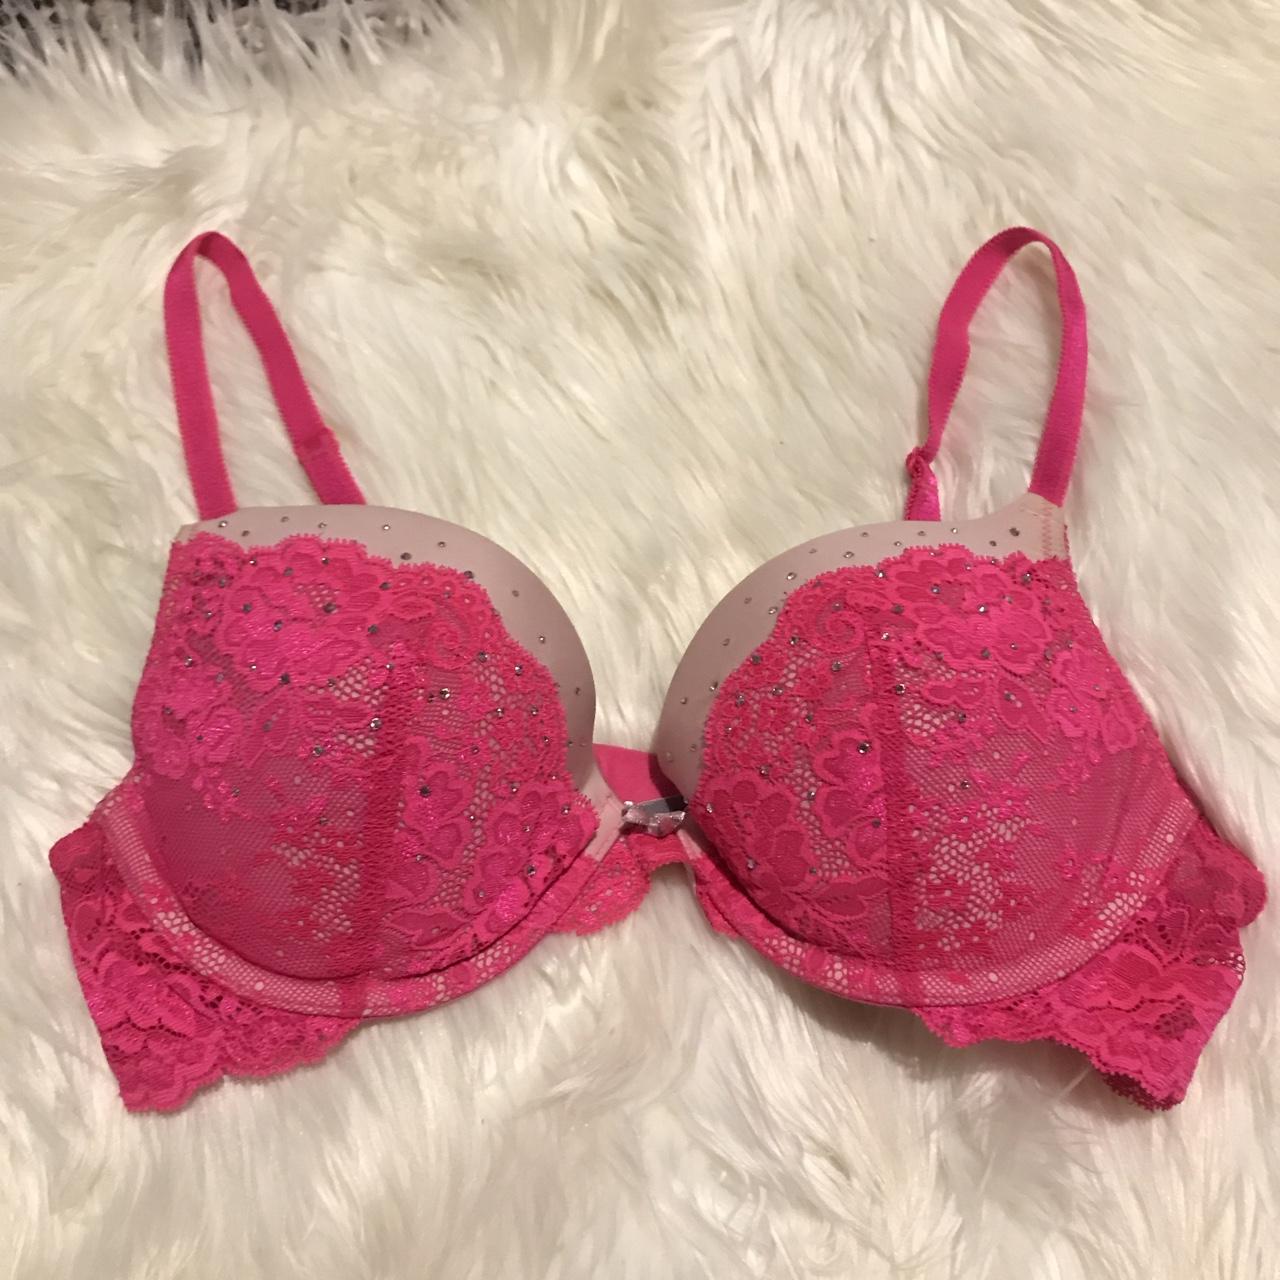 Stunning Pink Victoria's Secret Push Up Bra - Size 36B